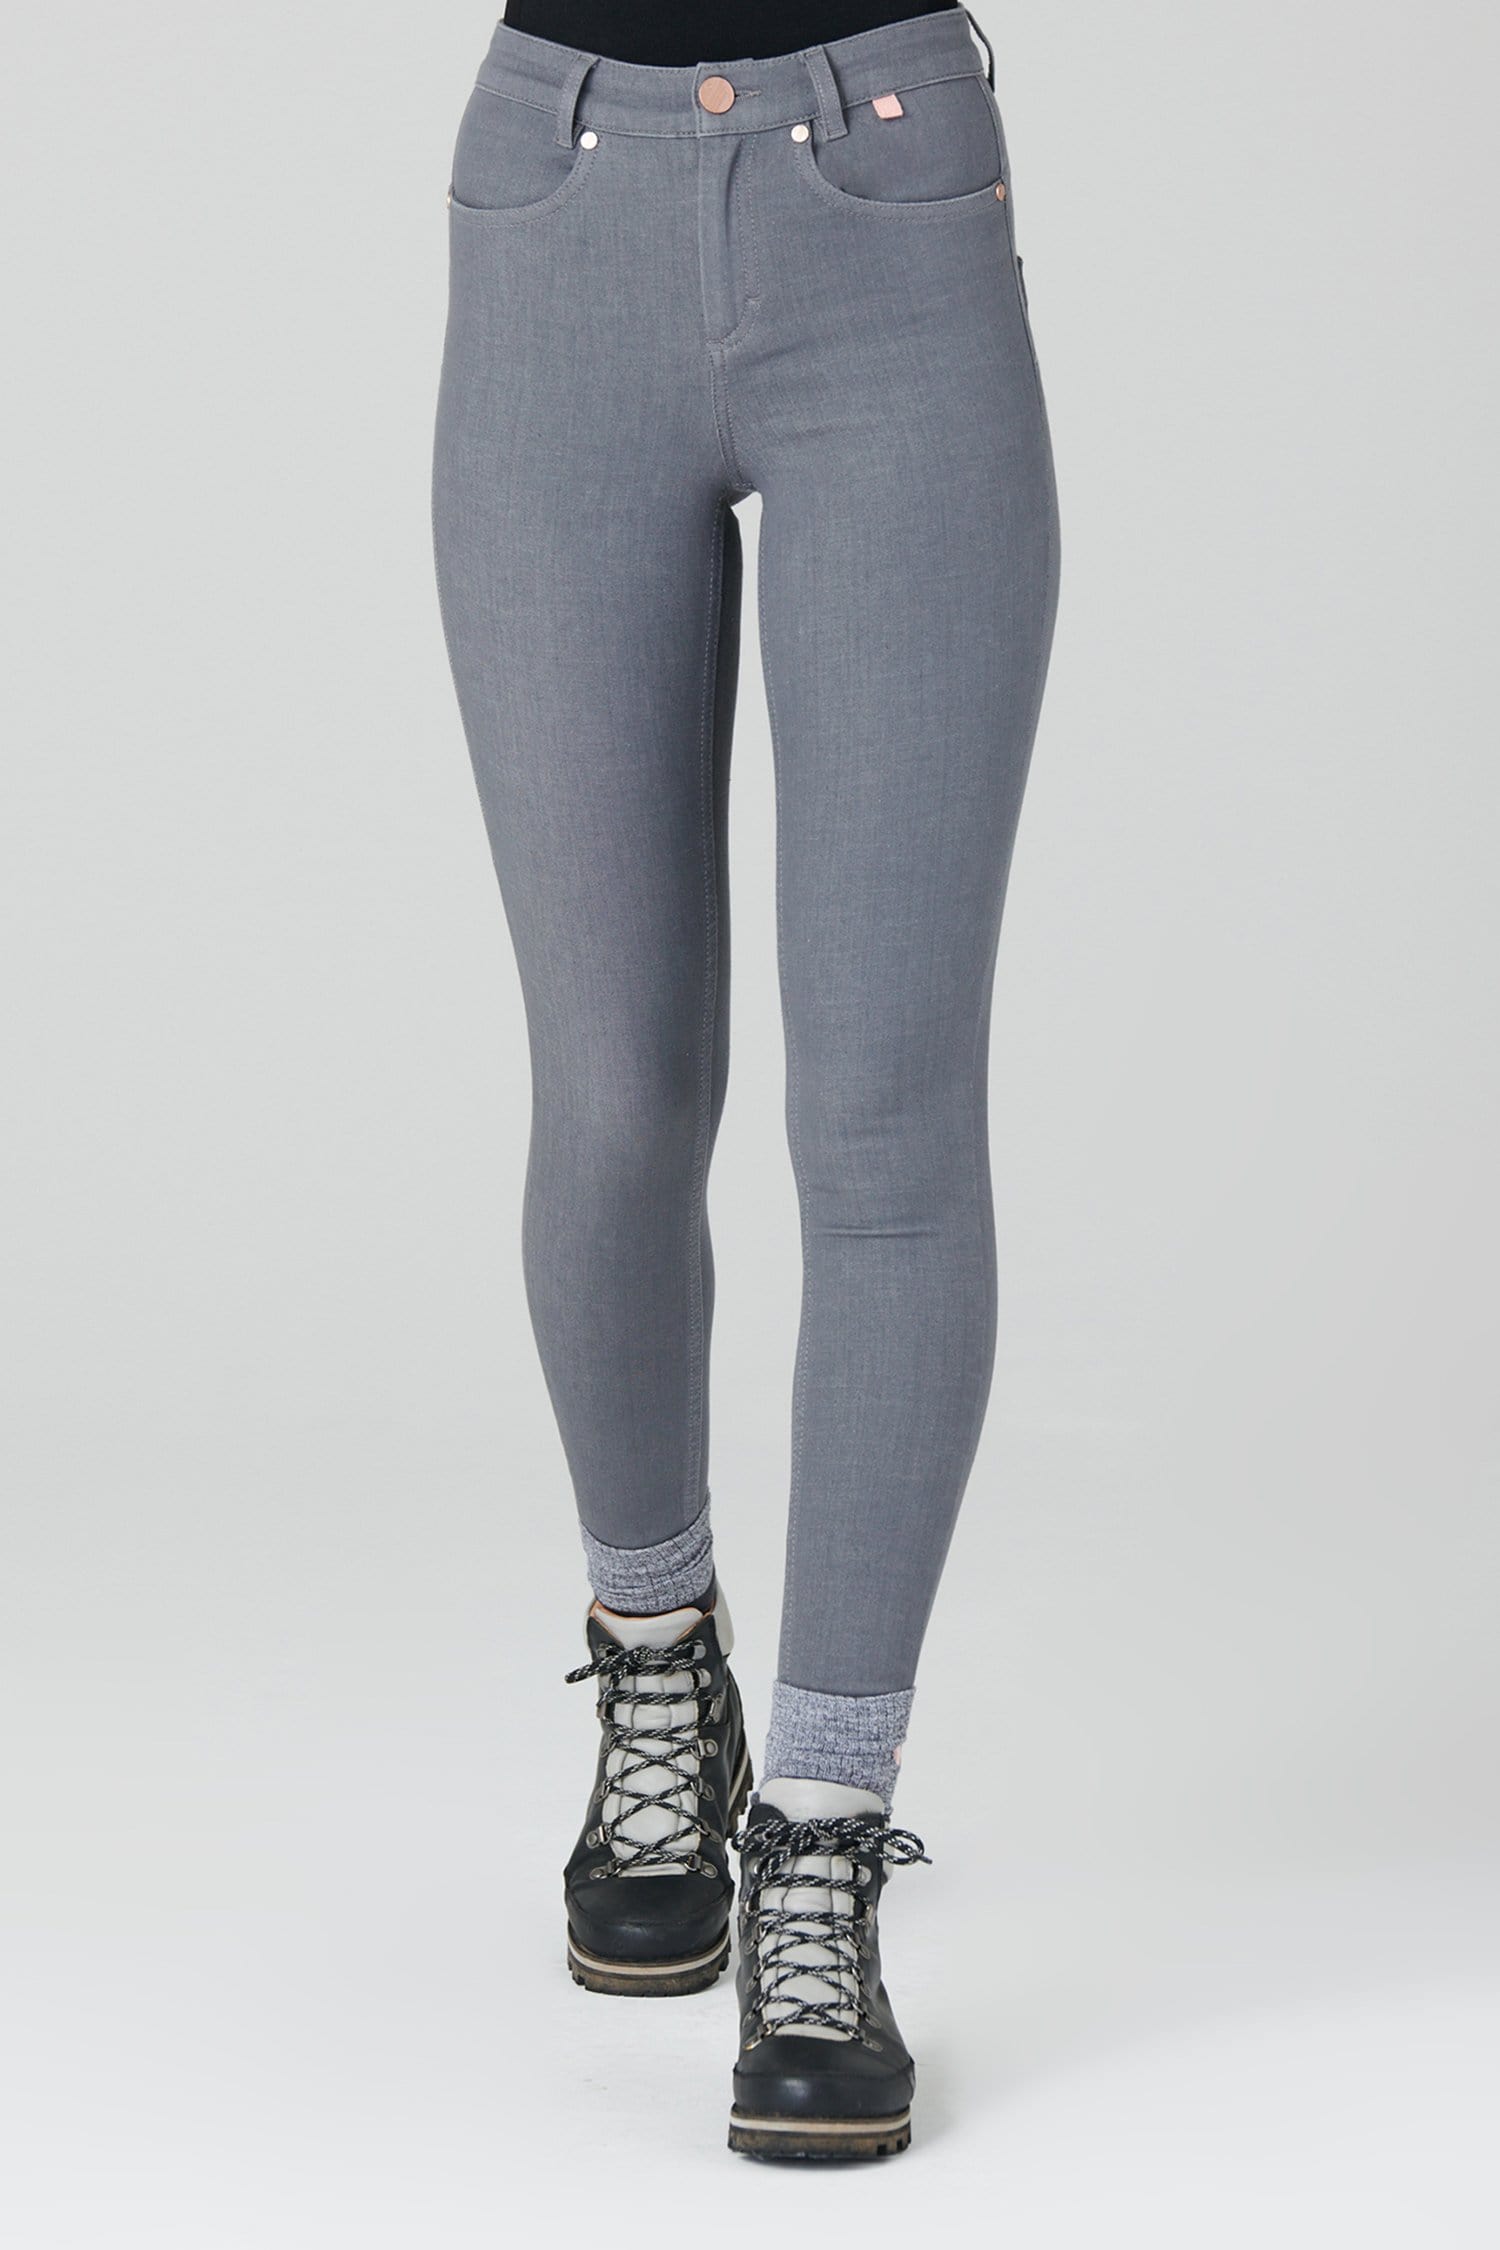 The Skinny Outdoor Jeans - Grey Denim - 28p / Uk10 - Womens - Acai Outdoorwear